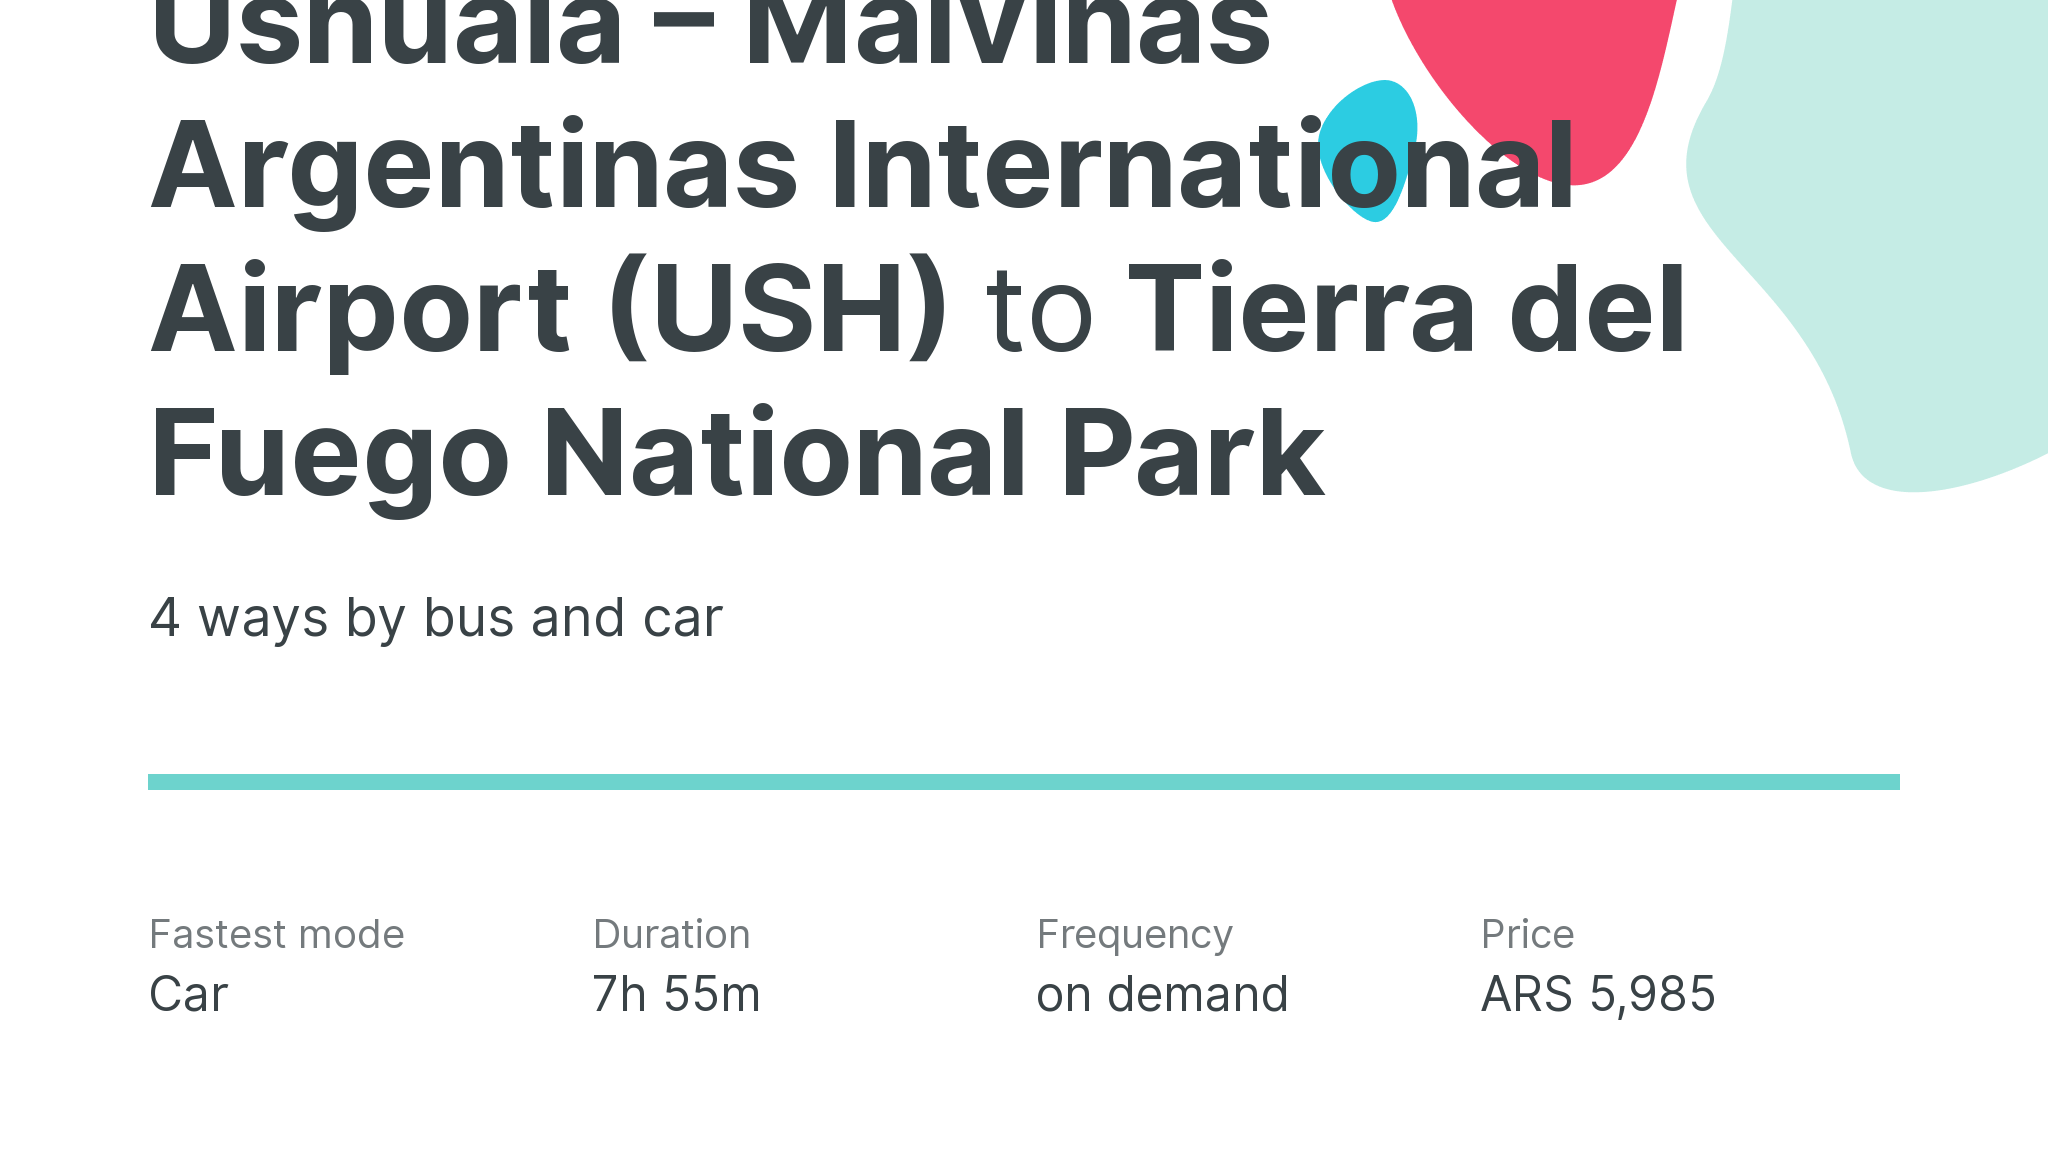 How do I get from Ushuaia – Malvinas Argentinas International Airport (USH) to Tierra del Fuego National Park